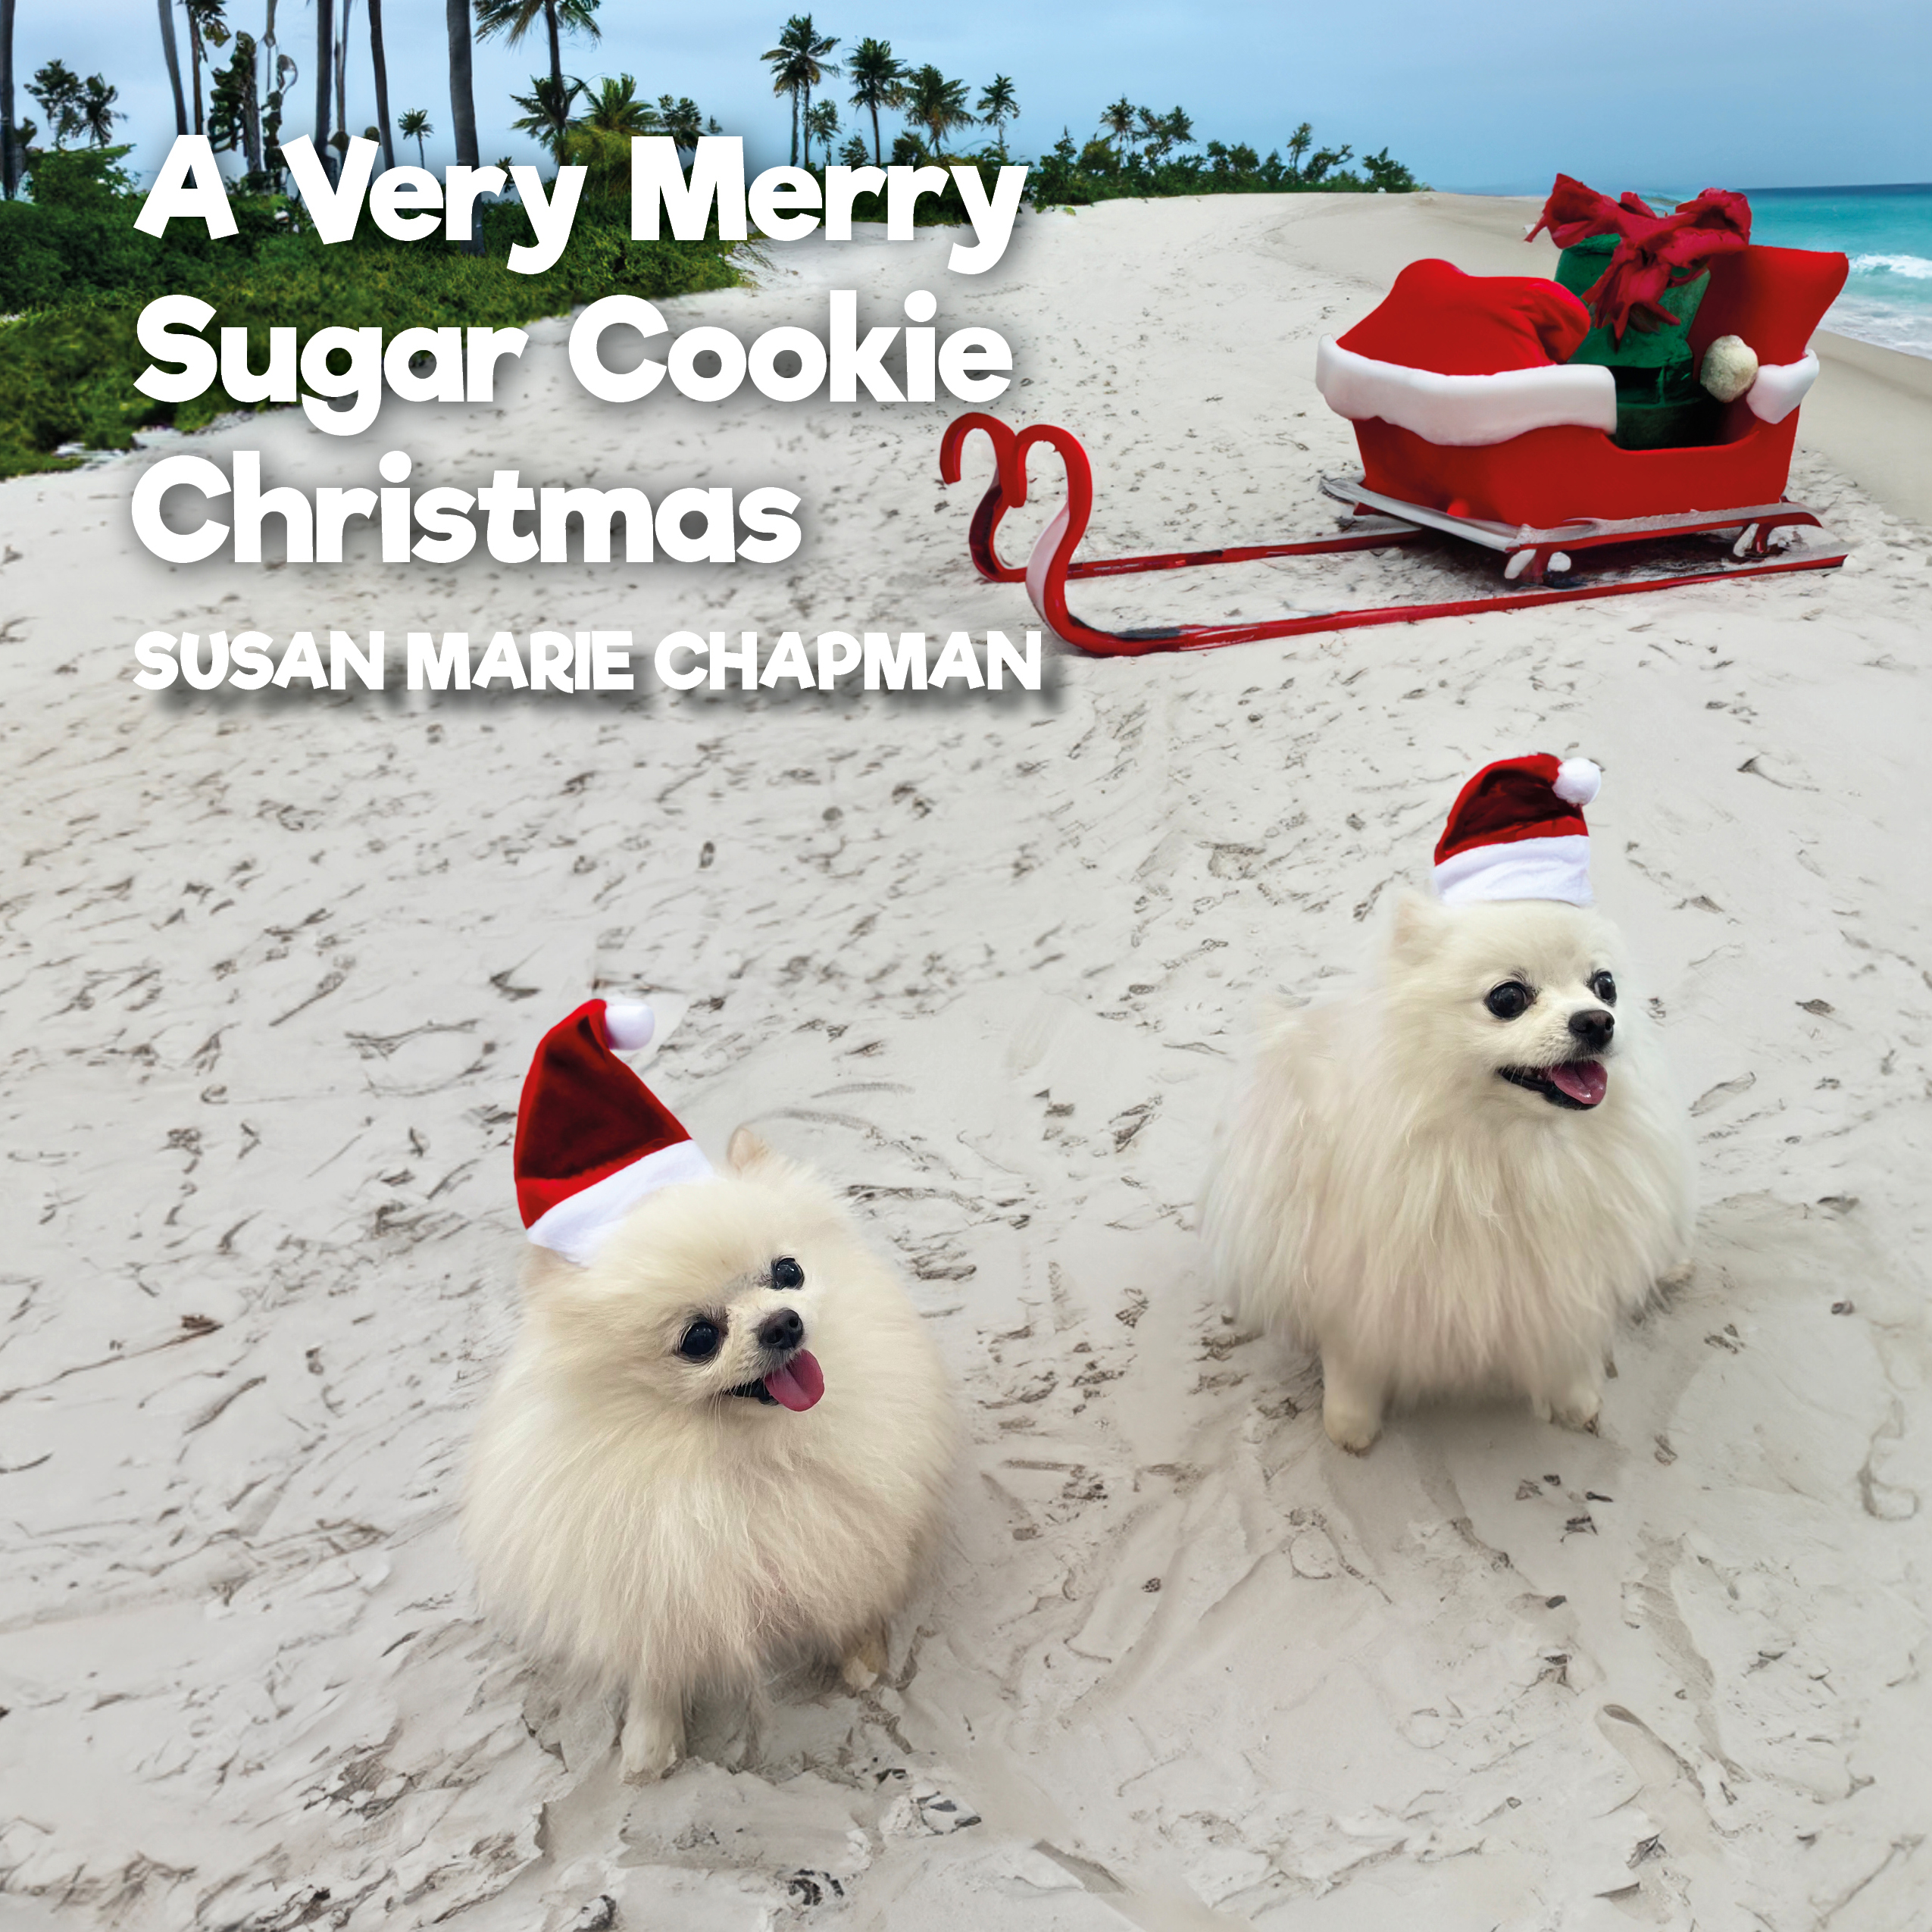 https://www.amazon.com/Very-Merry-Sugar-Cookie-Christmas/dp/173680569X